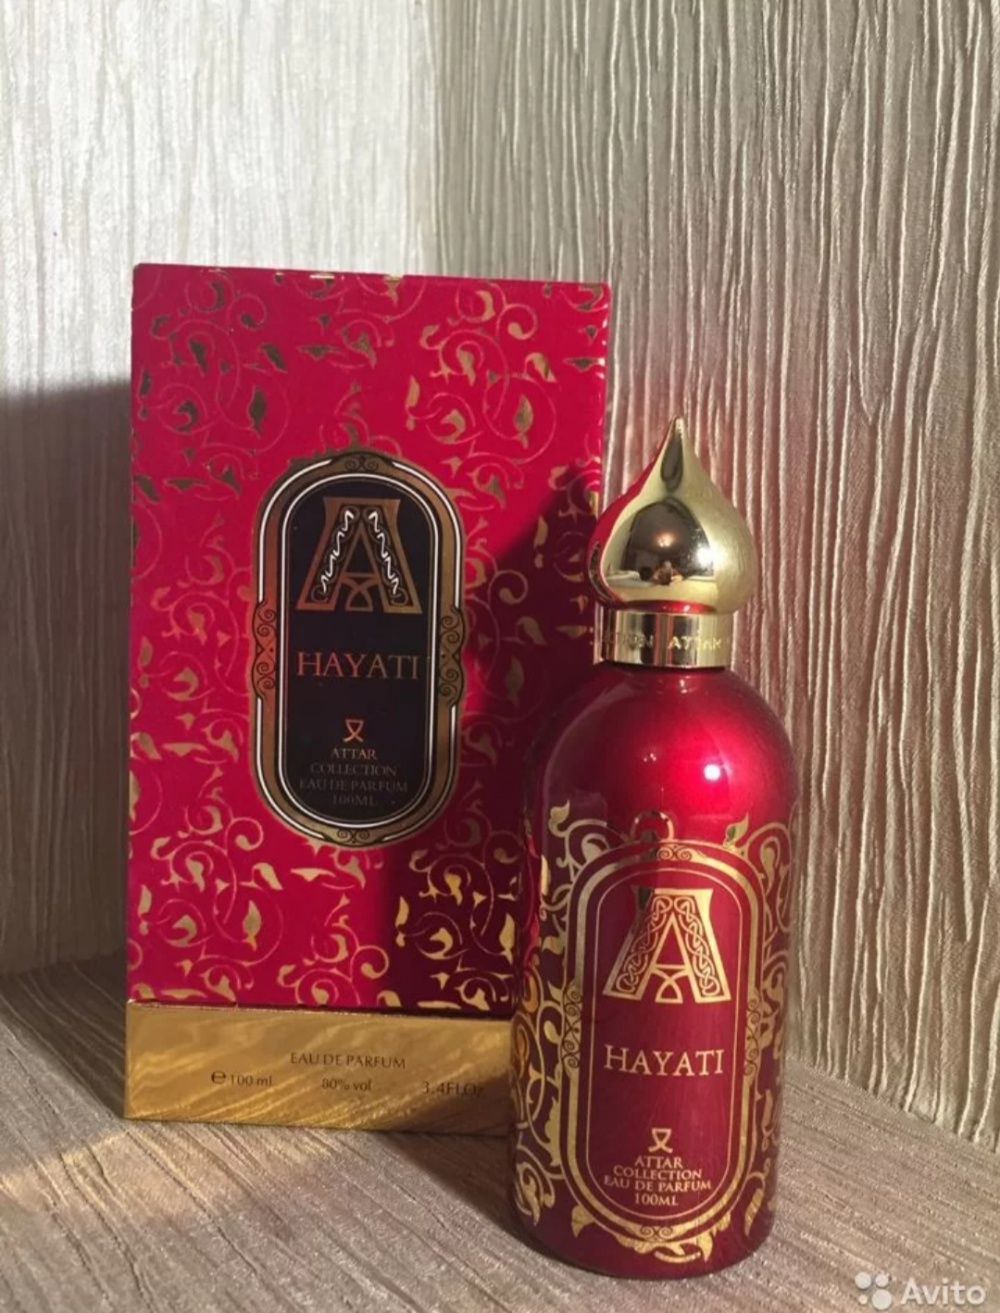 Hayati Attar Collection,edp,от 100 ml